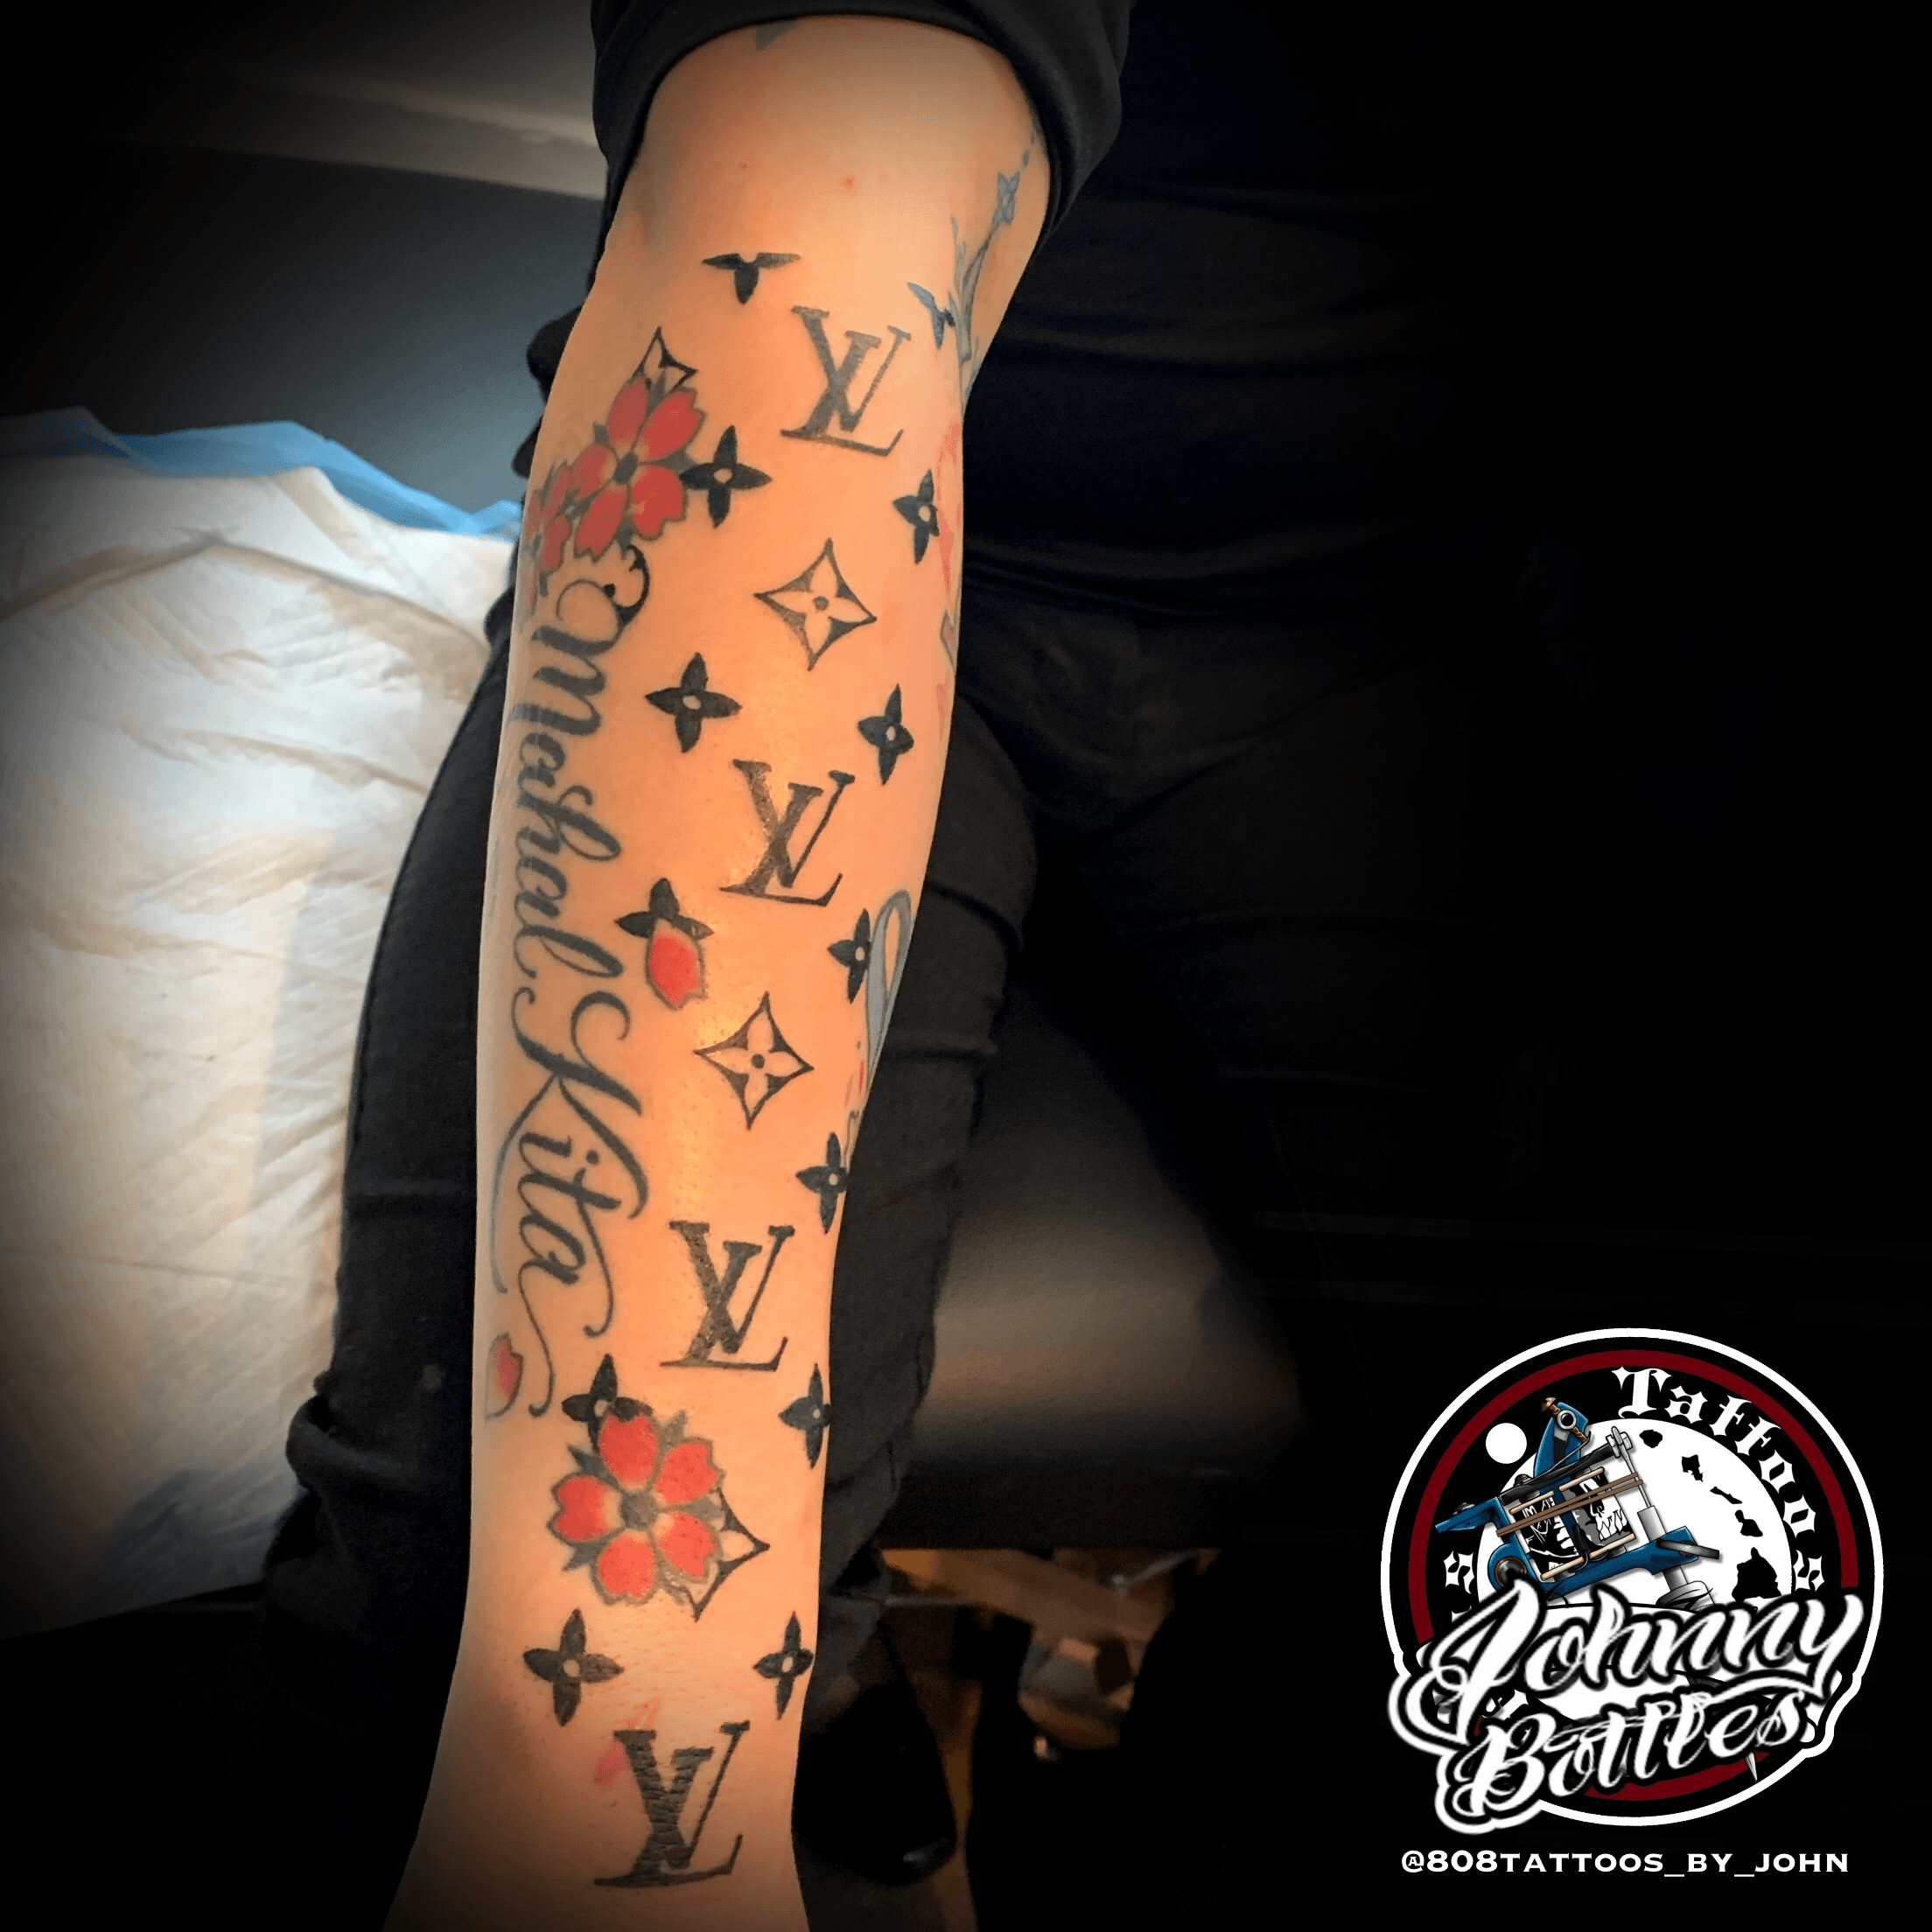 Tattoo uploaded by JOHNNY BOTTLES • Louis Vitton Tattoo I Did • Tattoodo